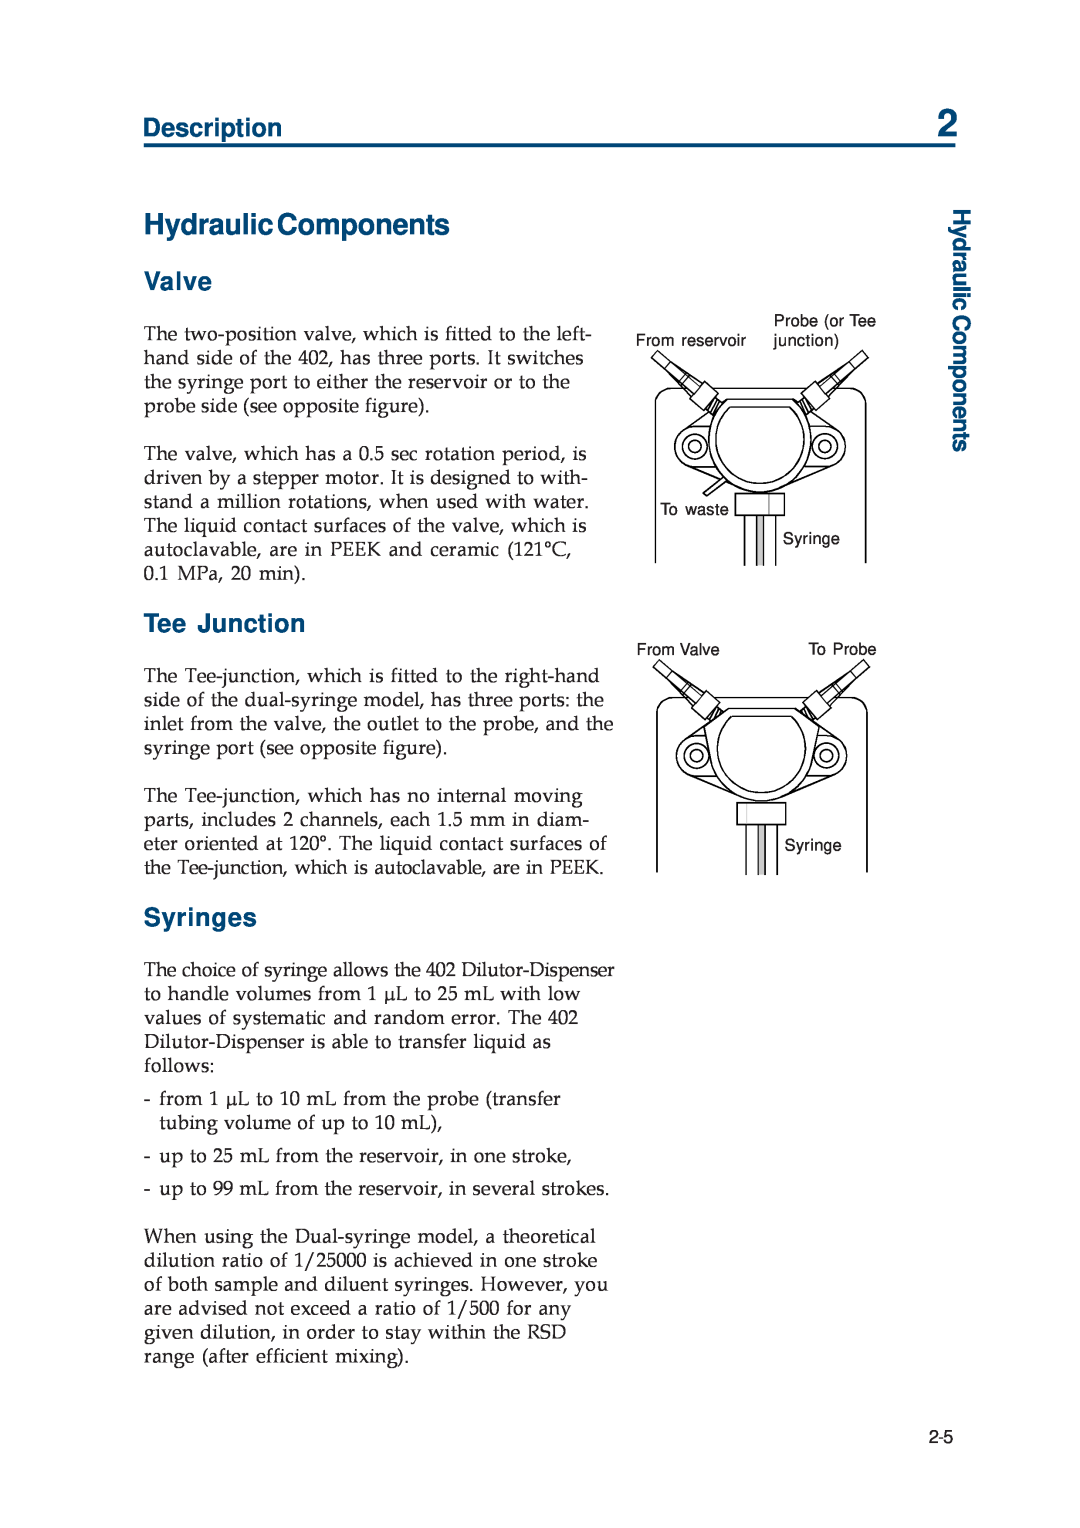 Gilson 402 manual Hydraulic Components, Valve, Tee Junction, Syringes, Description 